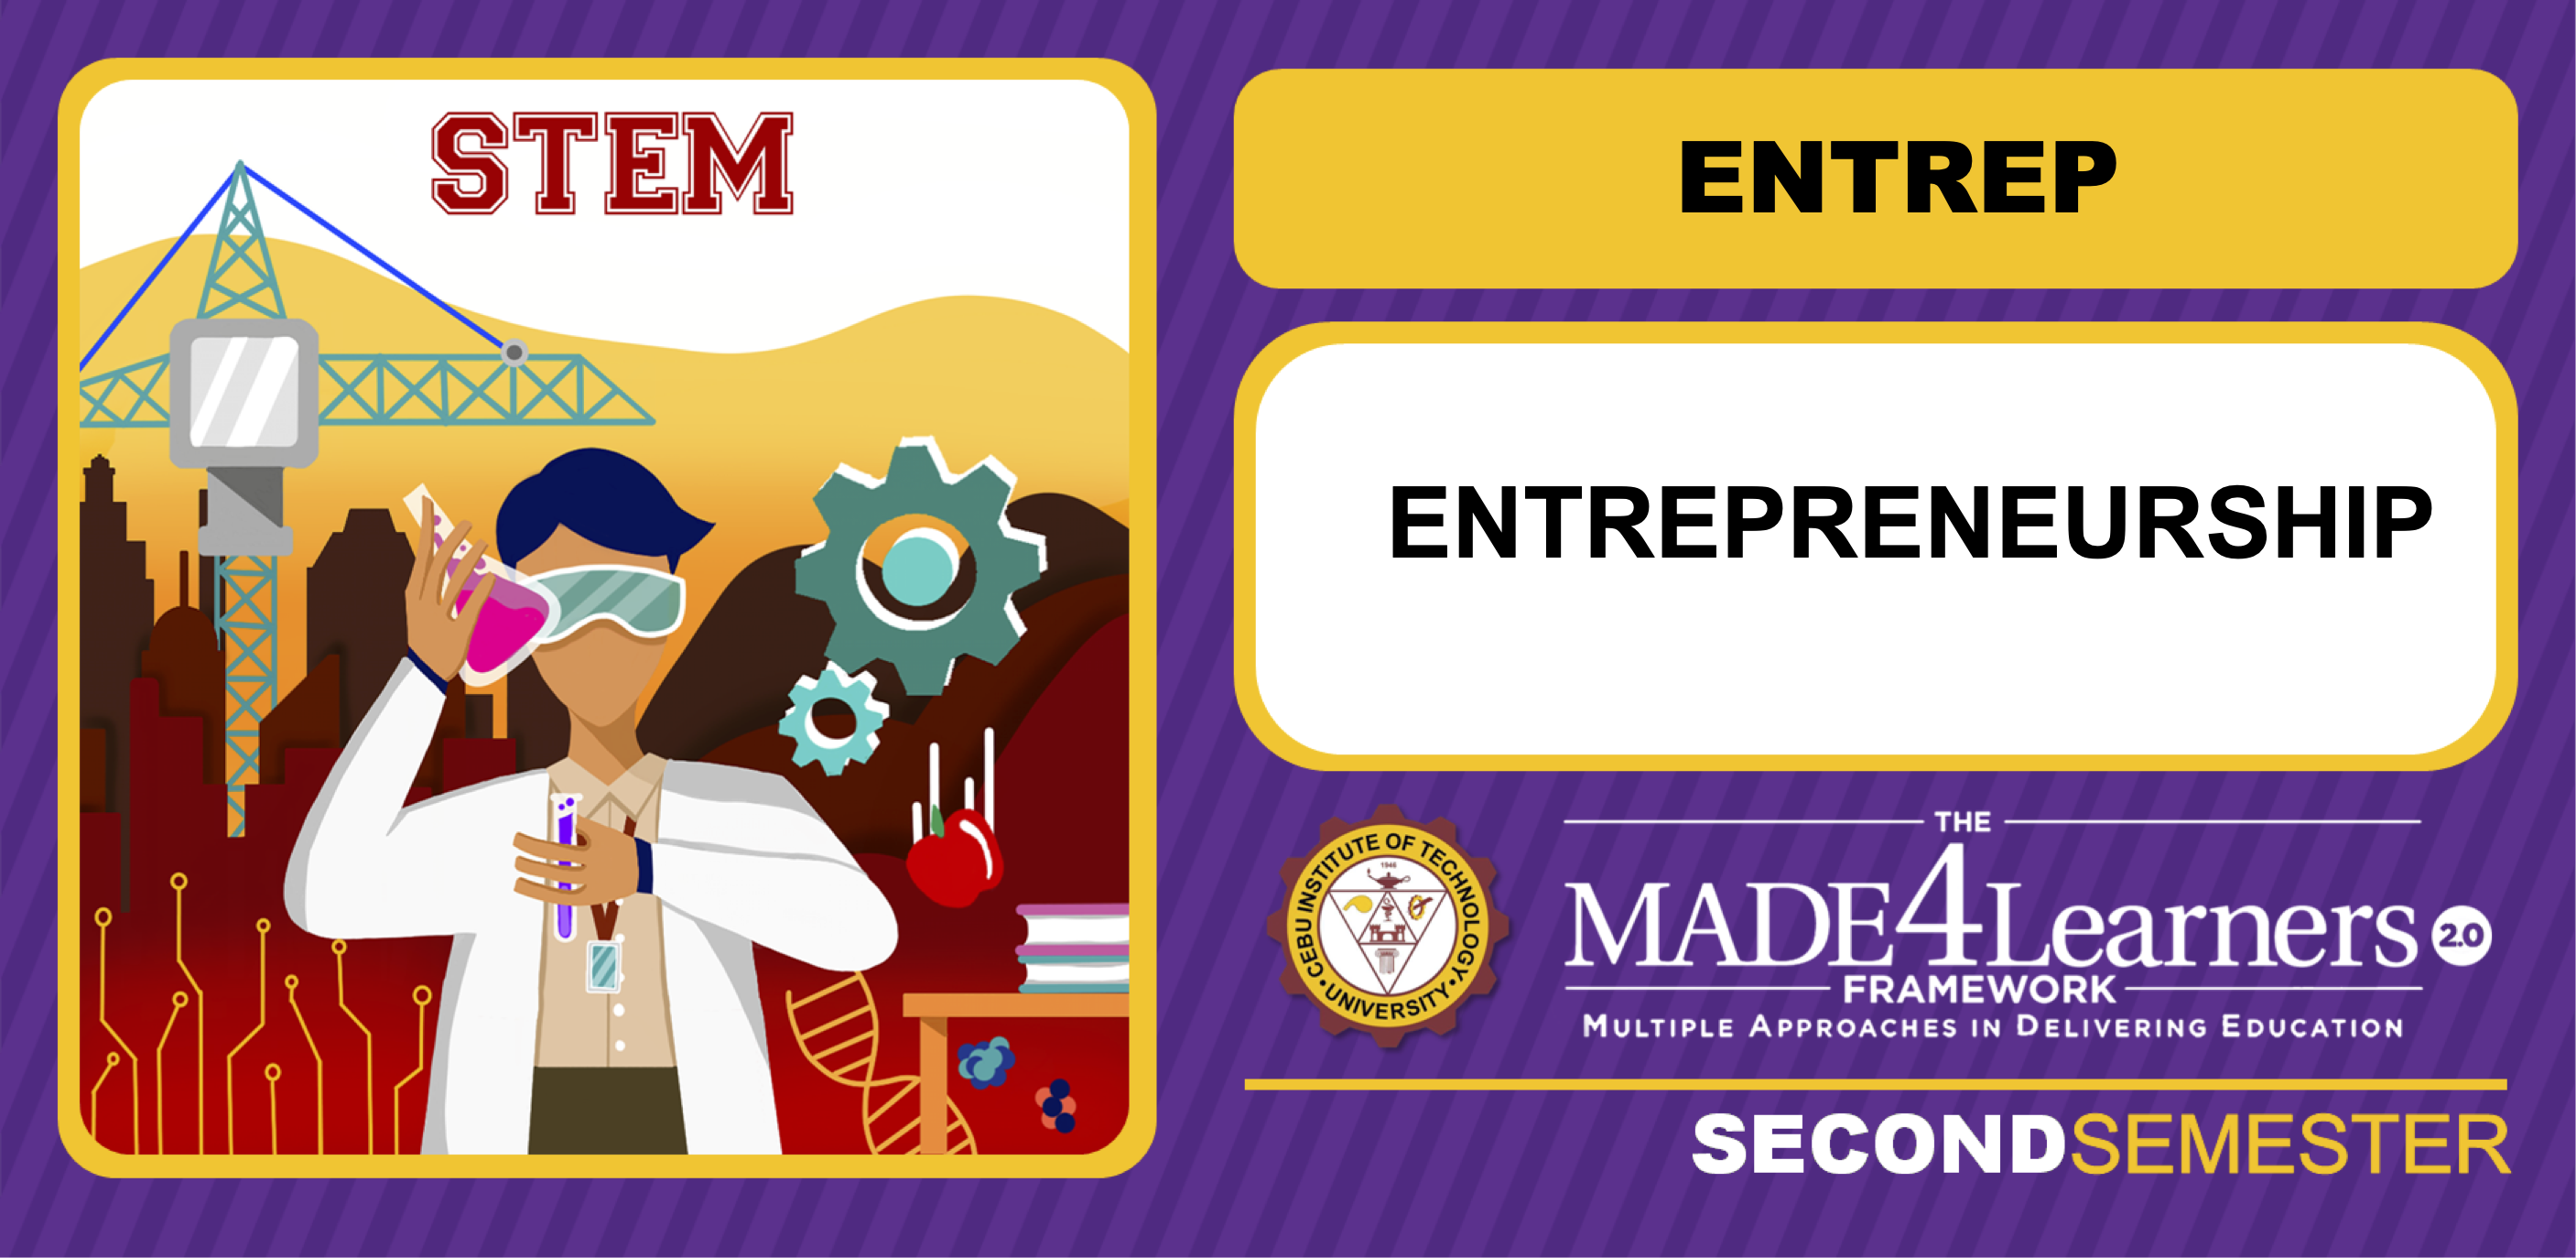 ENTREP: Entrepreneurship (Tenefrancia)